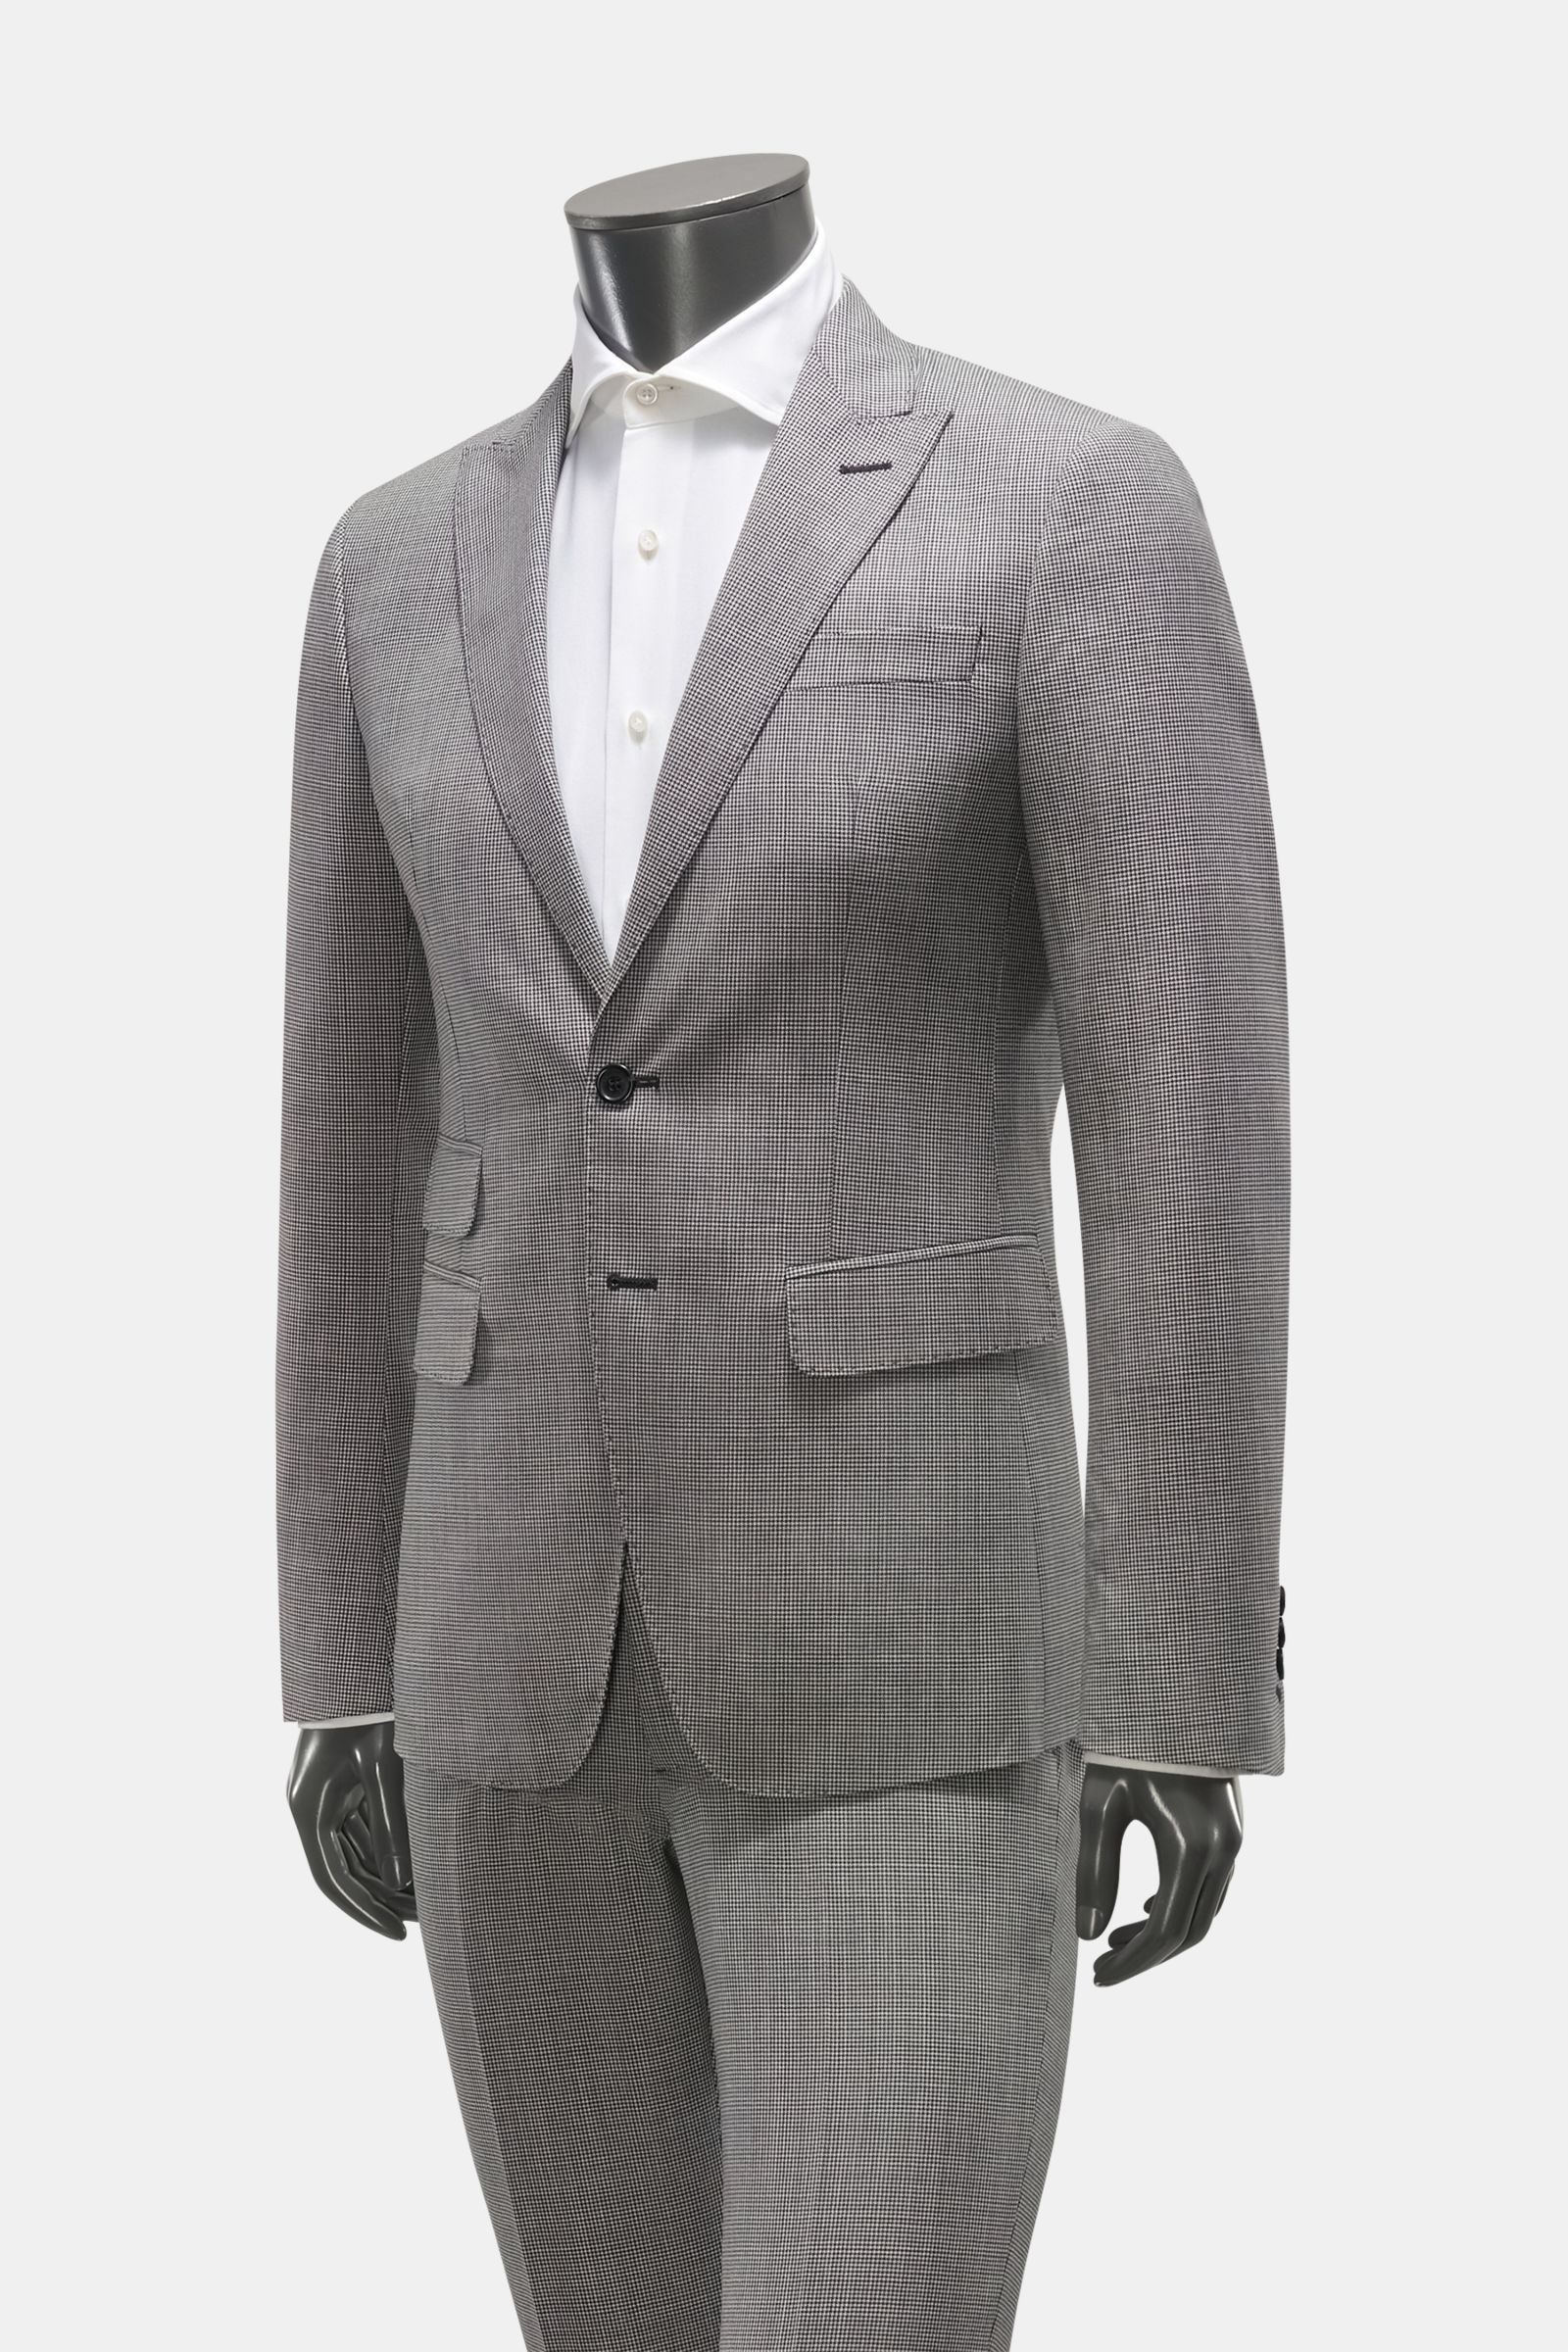 DSQUARED2 suit 'London' black/off-white checked | BRAUN Hamburg